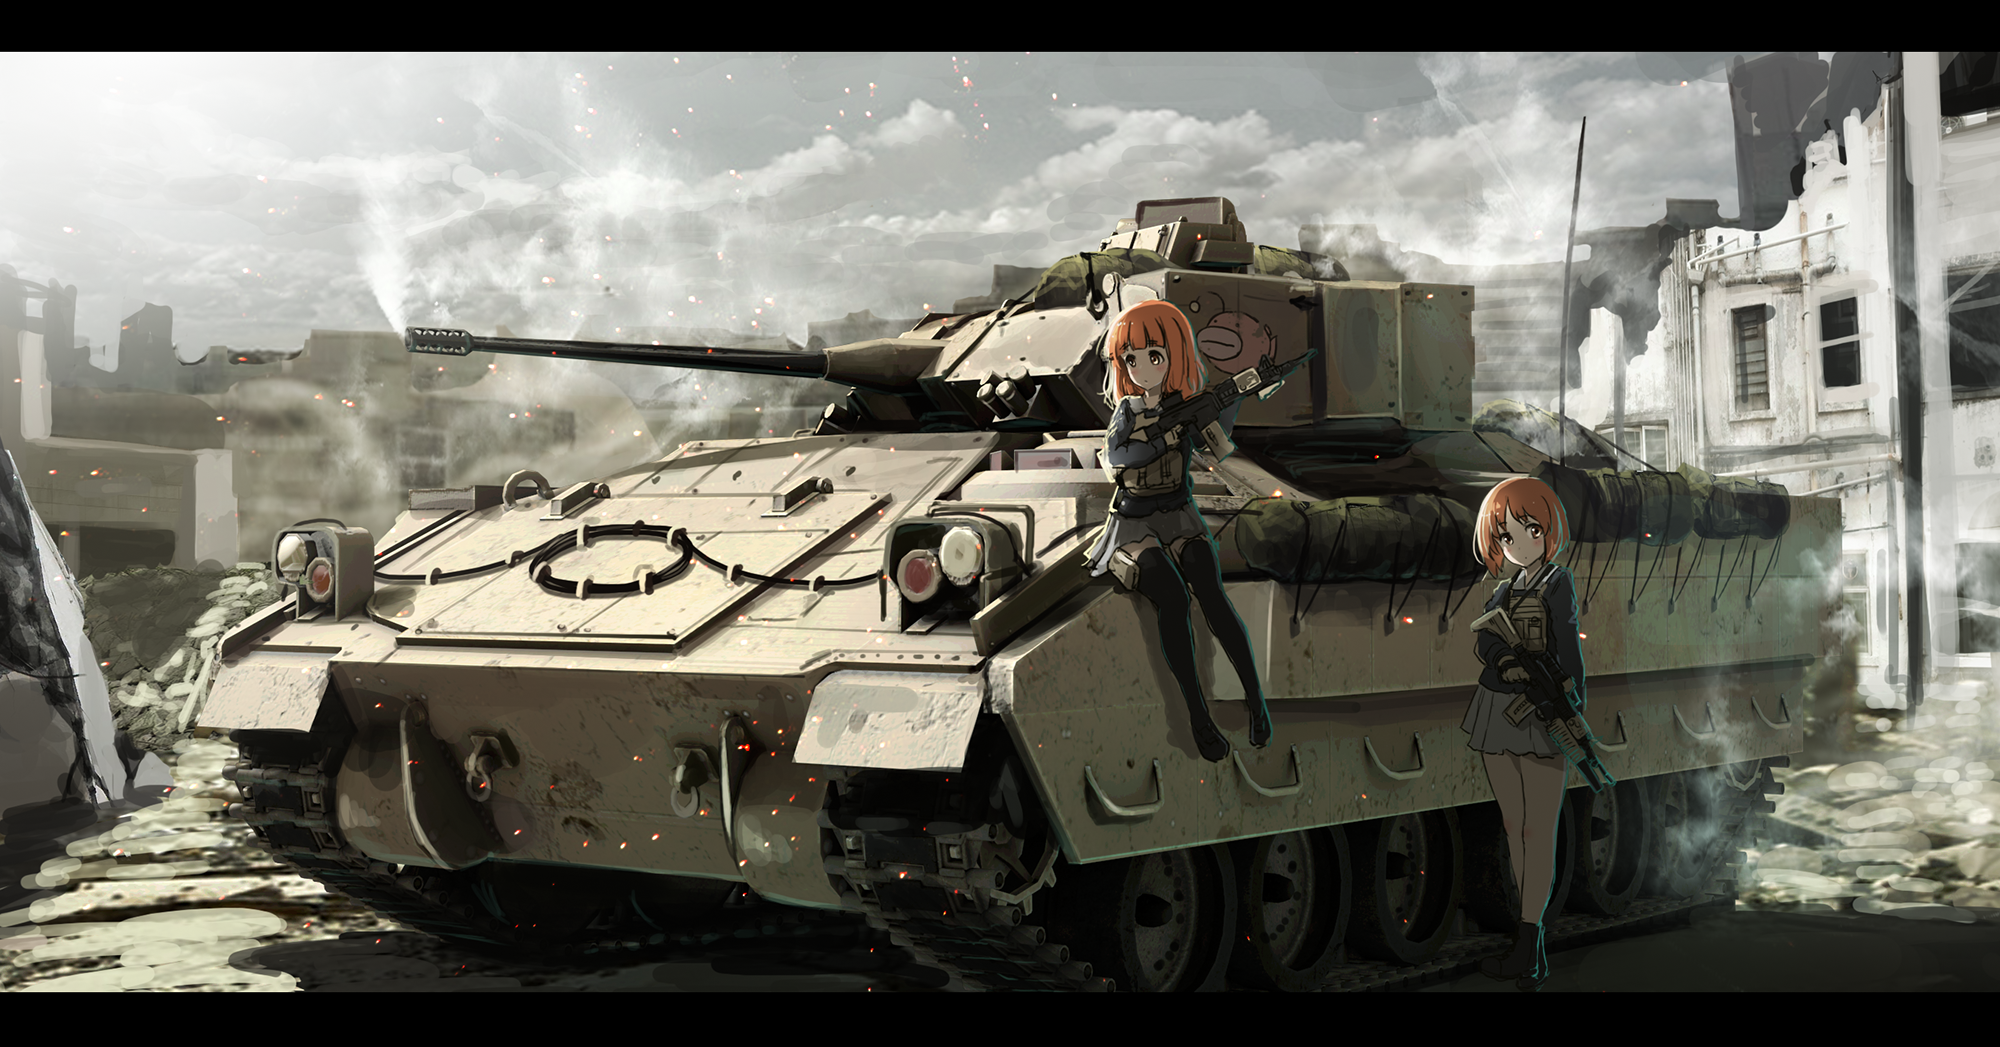 Anime 2000x1047 anime anime girls Girls und Panzer tank weapon gun M2 Bradley military vehicle two women machine gun redhead shoulder length hair Pixiv